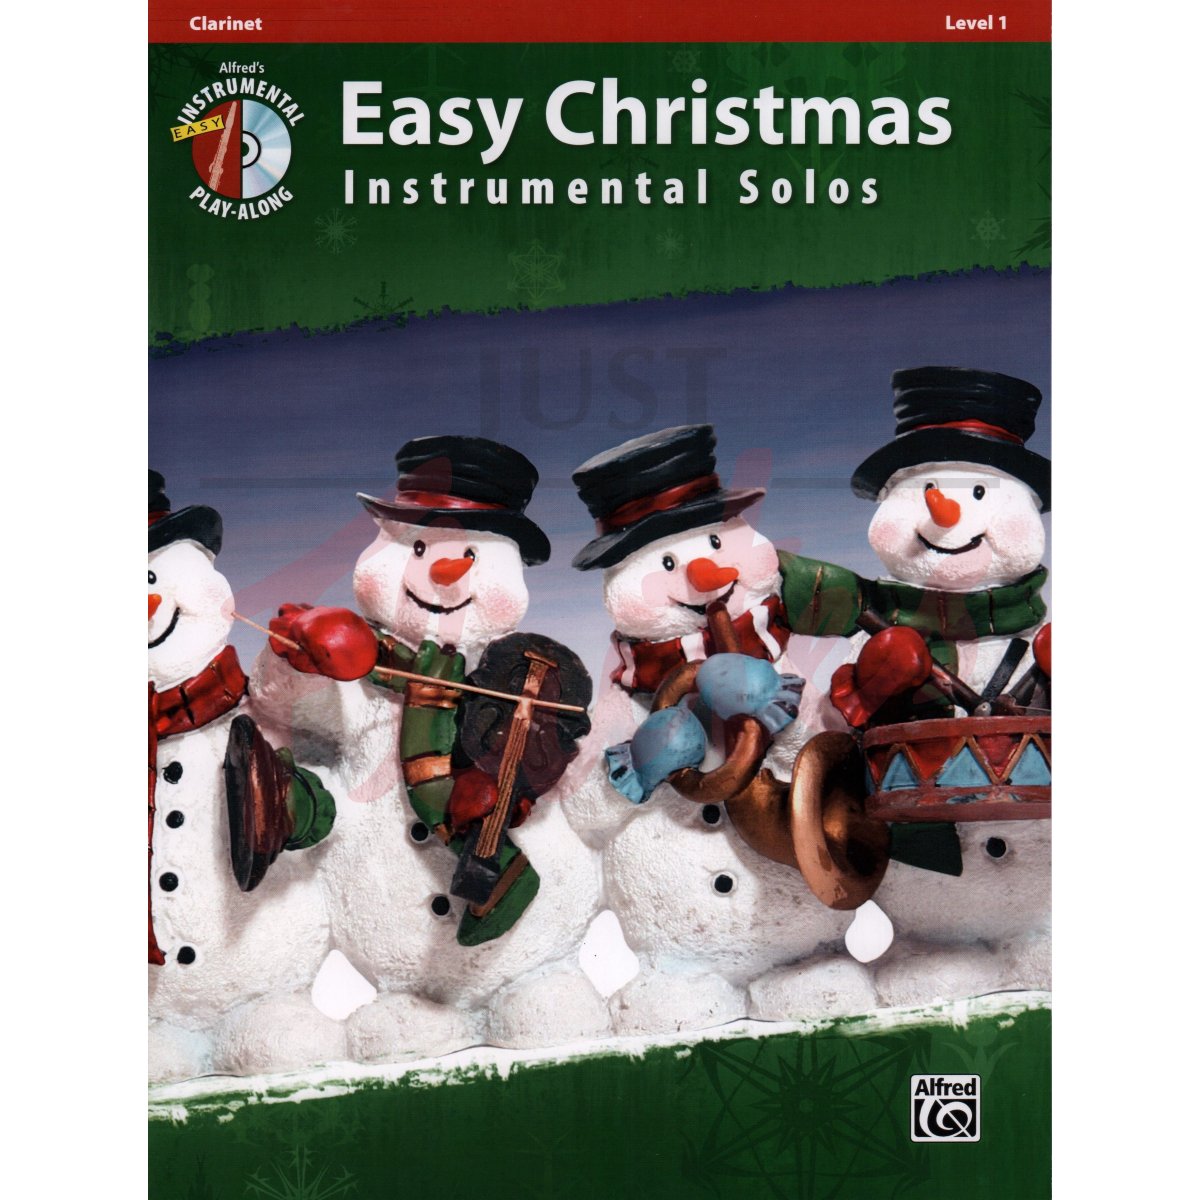 Easy Christmas Instrumental Solos [Clarinet]